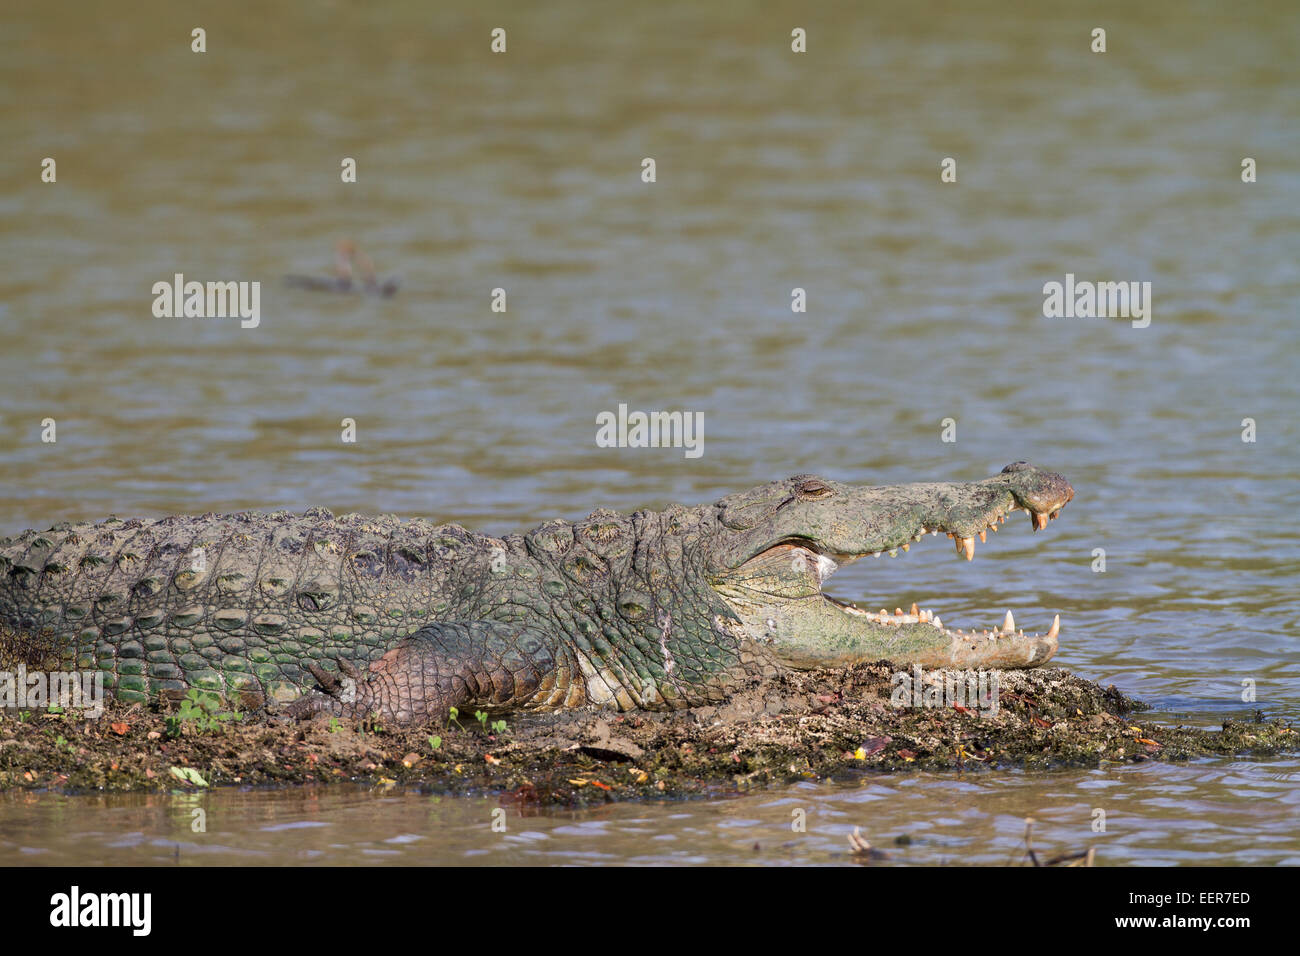 The mugger crocodile Crocodylus palustris Stock Photo